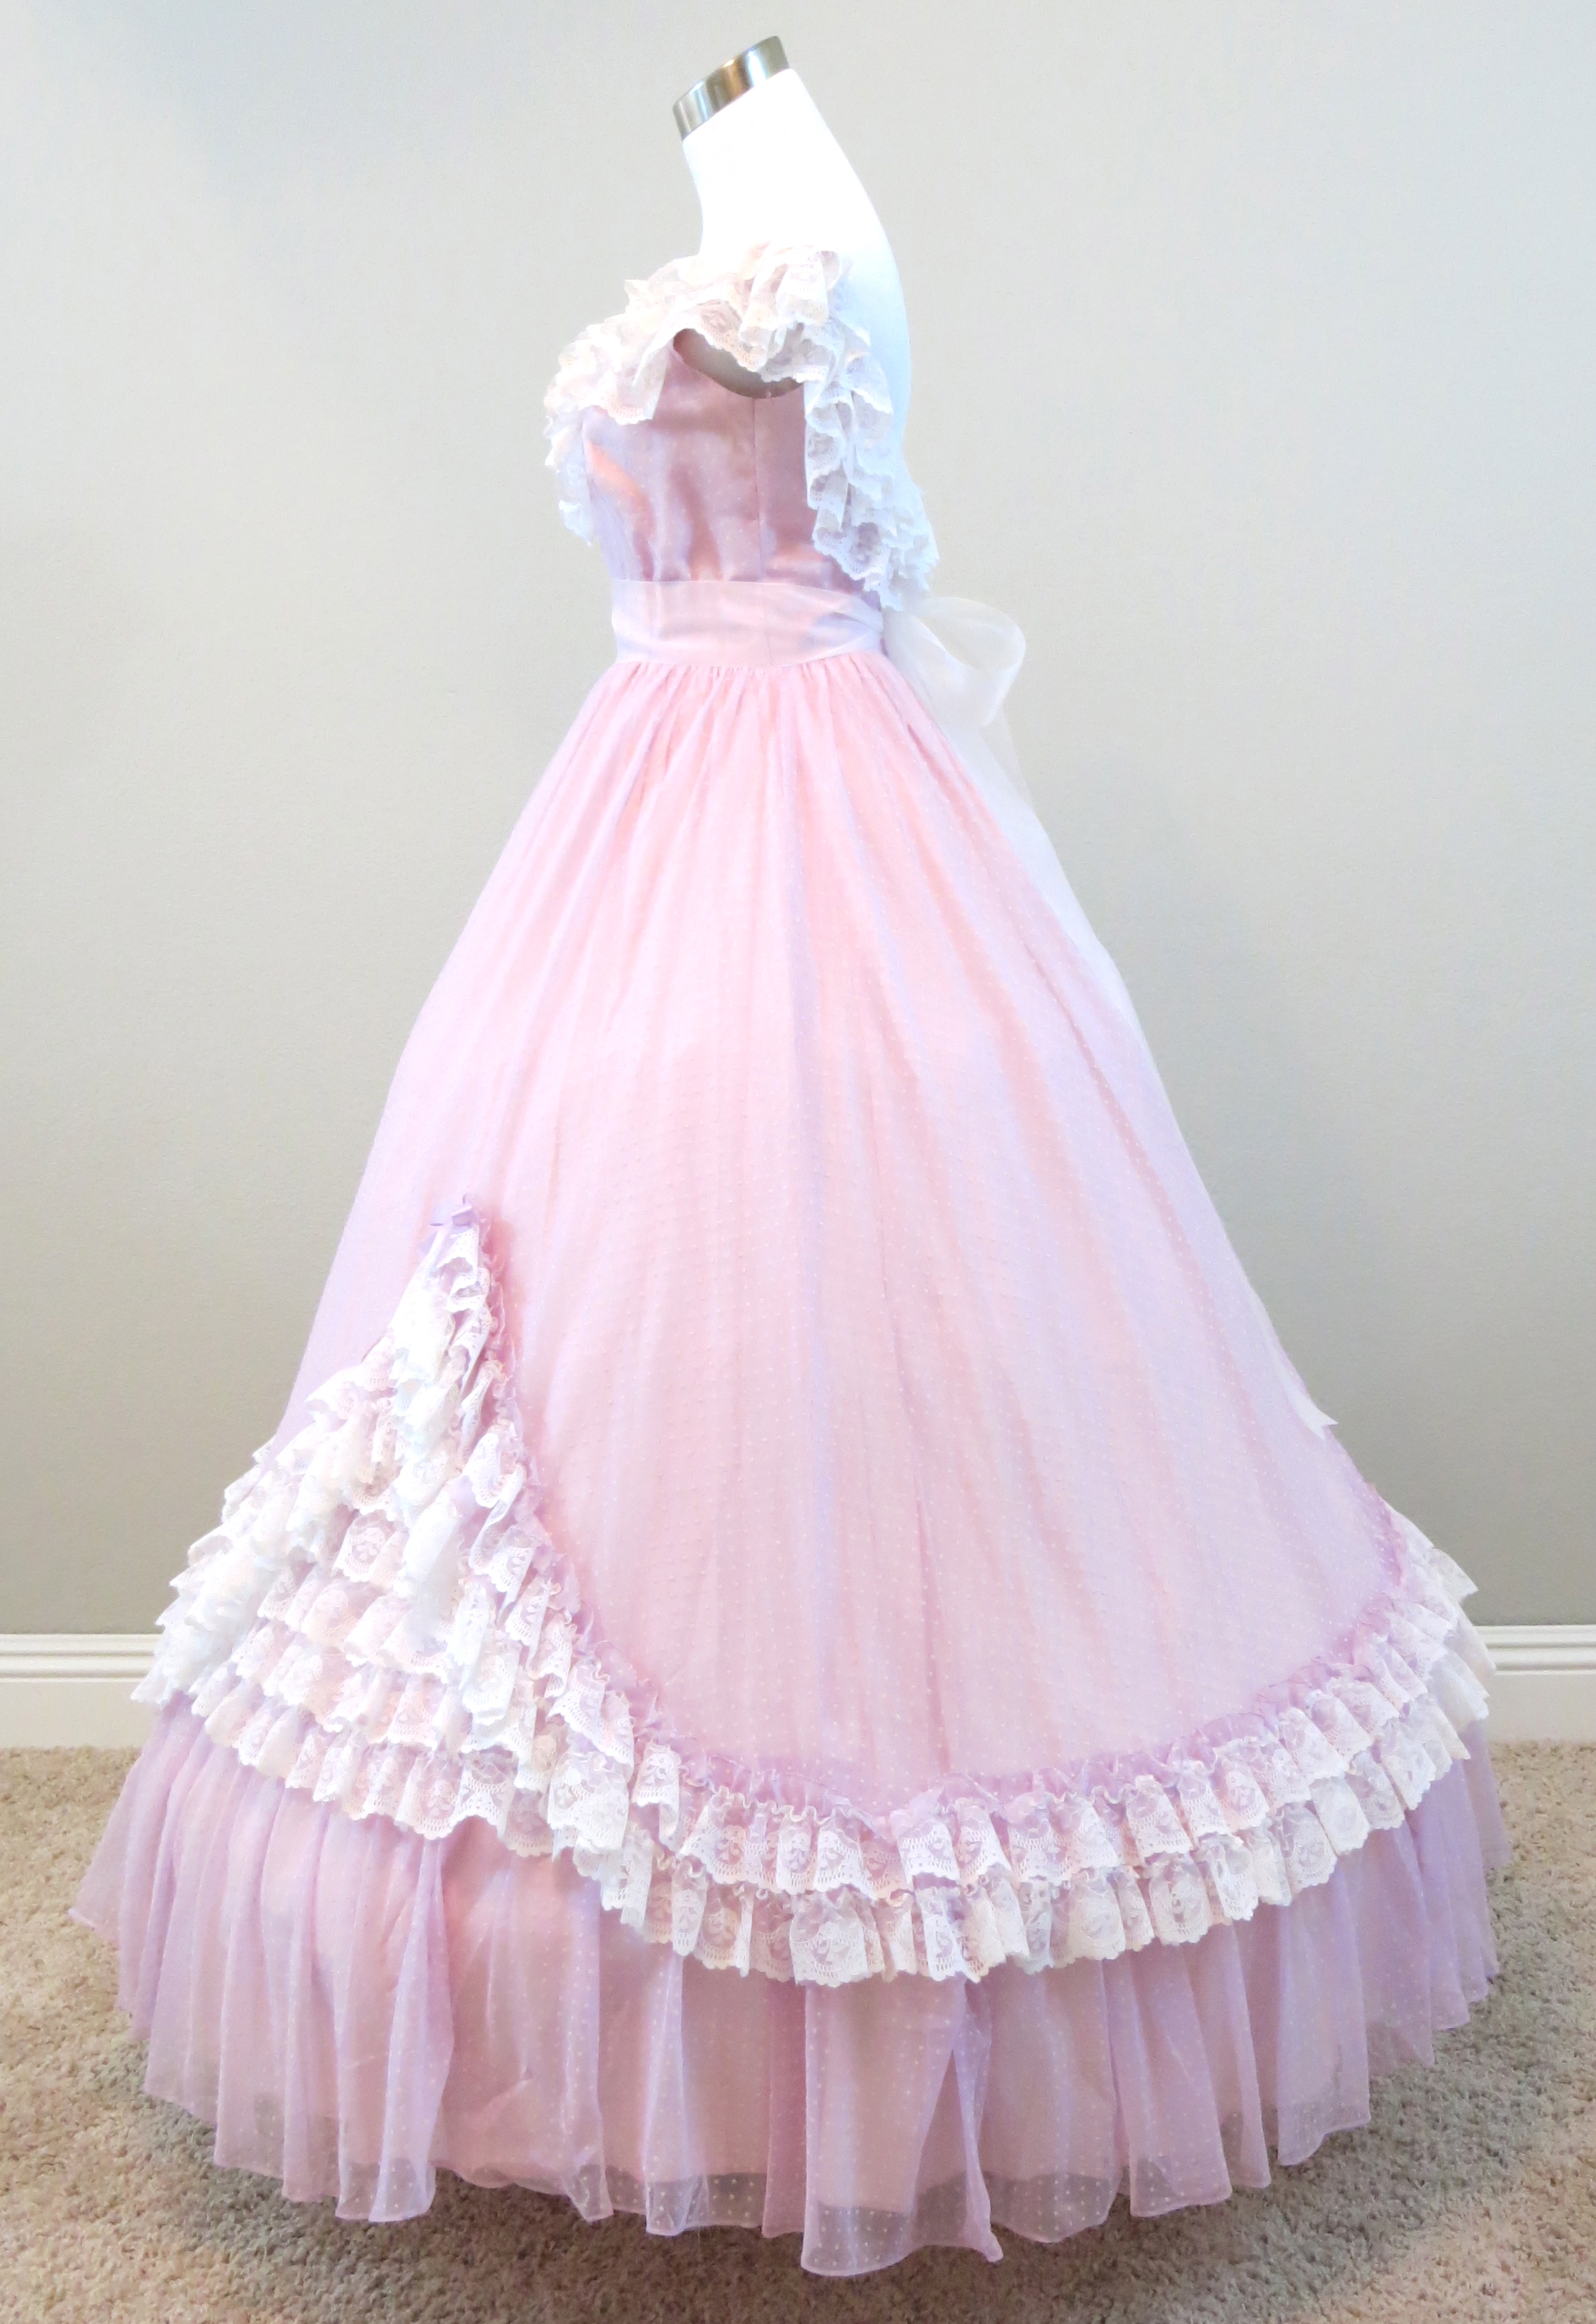 Lavender Chiffon Gown — Civil War Ball Gowns & Costume